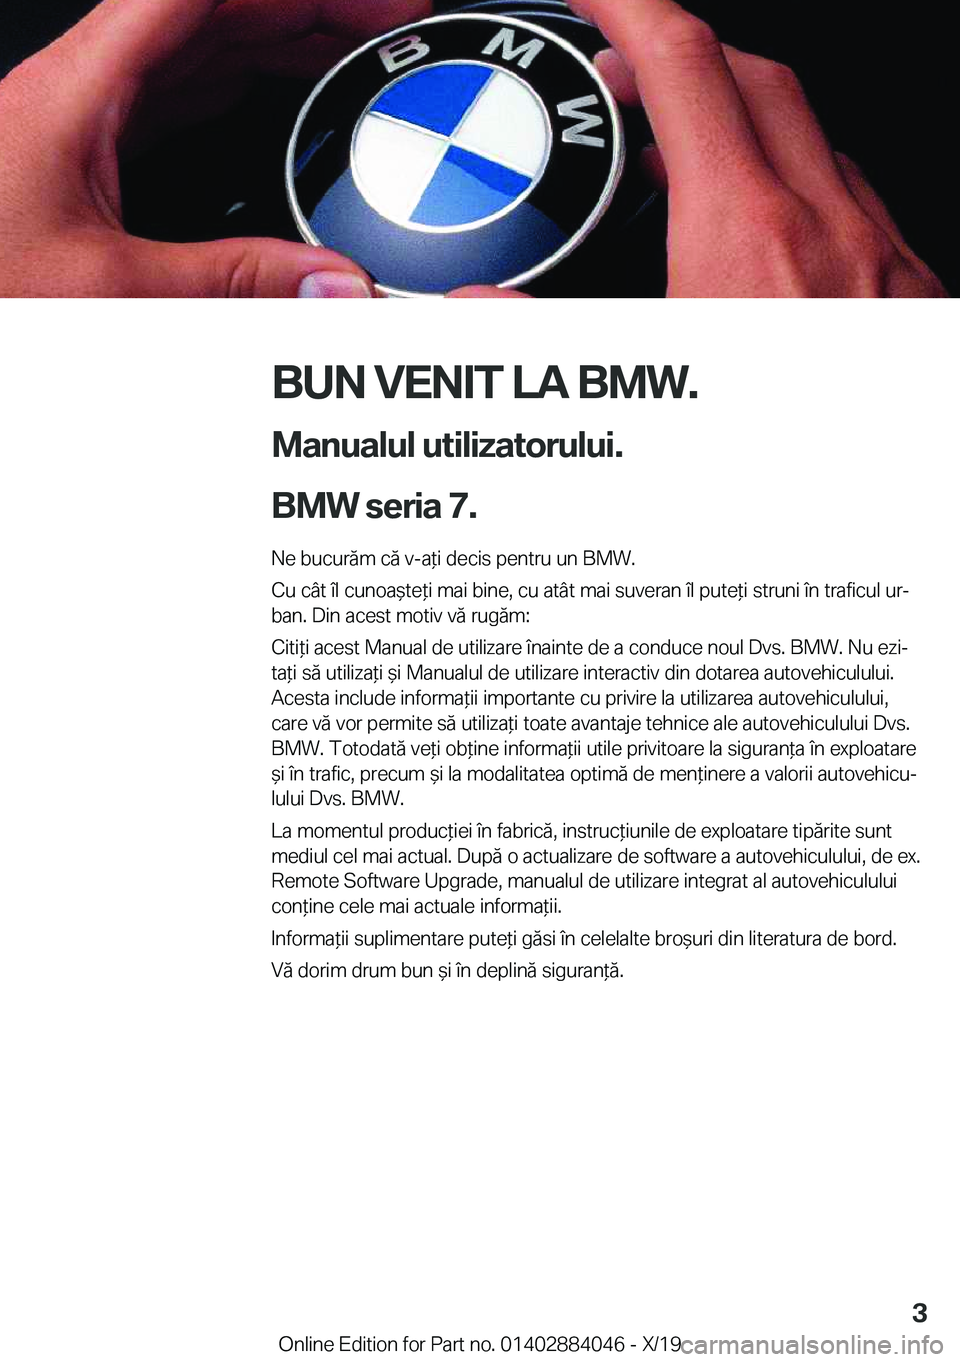 BMW 7 SERIES 2020  Ghiduri De Utilizare (in Romanian) �B�U�N��V�E�N�I�T��L�A��B�M�W�.�M�a�n�u�a�l�u�l��u�t�i�l�i�z�a�t�o�r�u�l�u�i�.
�B�M�W��s�e�r�i�a��7�.
�N�e��b�u�c�u�r�ă�m��c�ă��v�-�a*�i��d�e�c�i�s��p�e�n�t�r�u��u�n��B�M�W�.
�C�u��c�